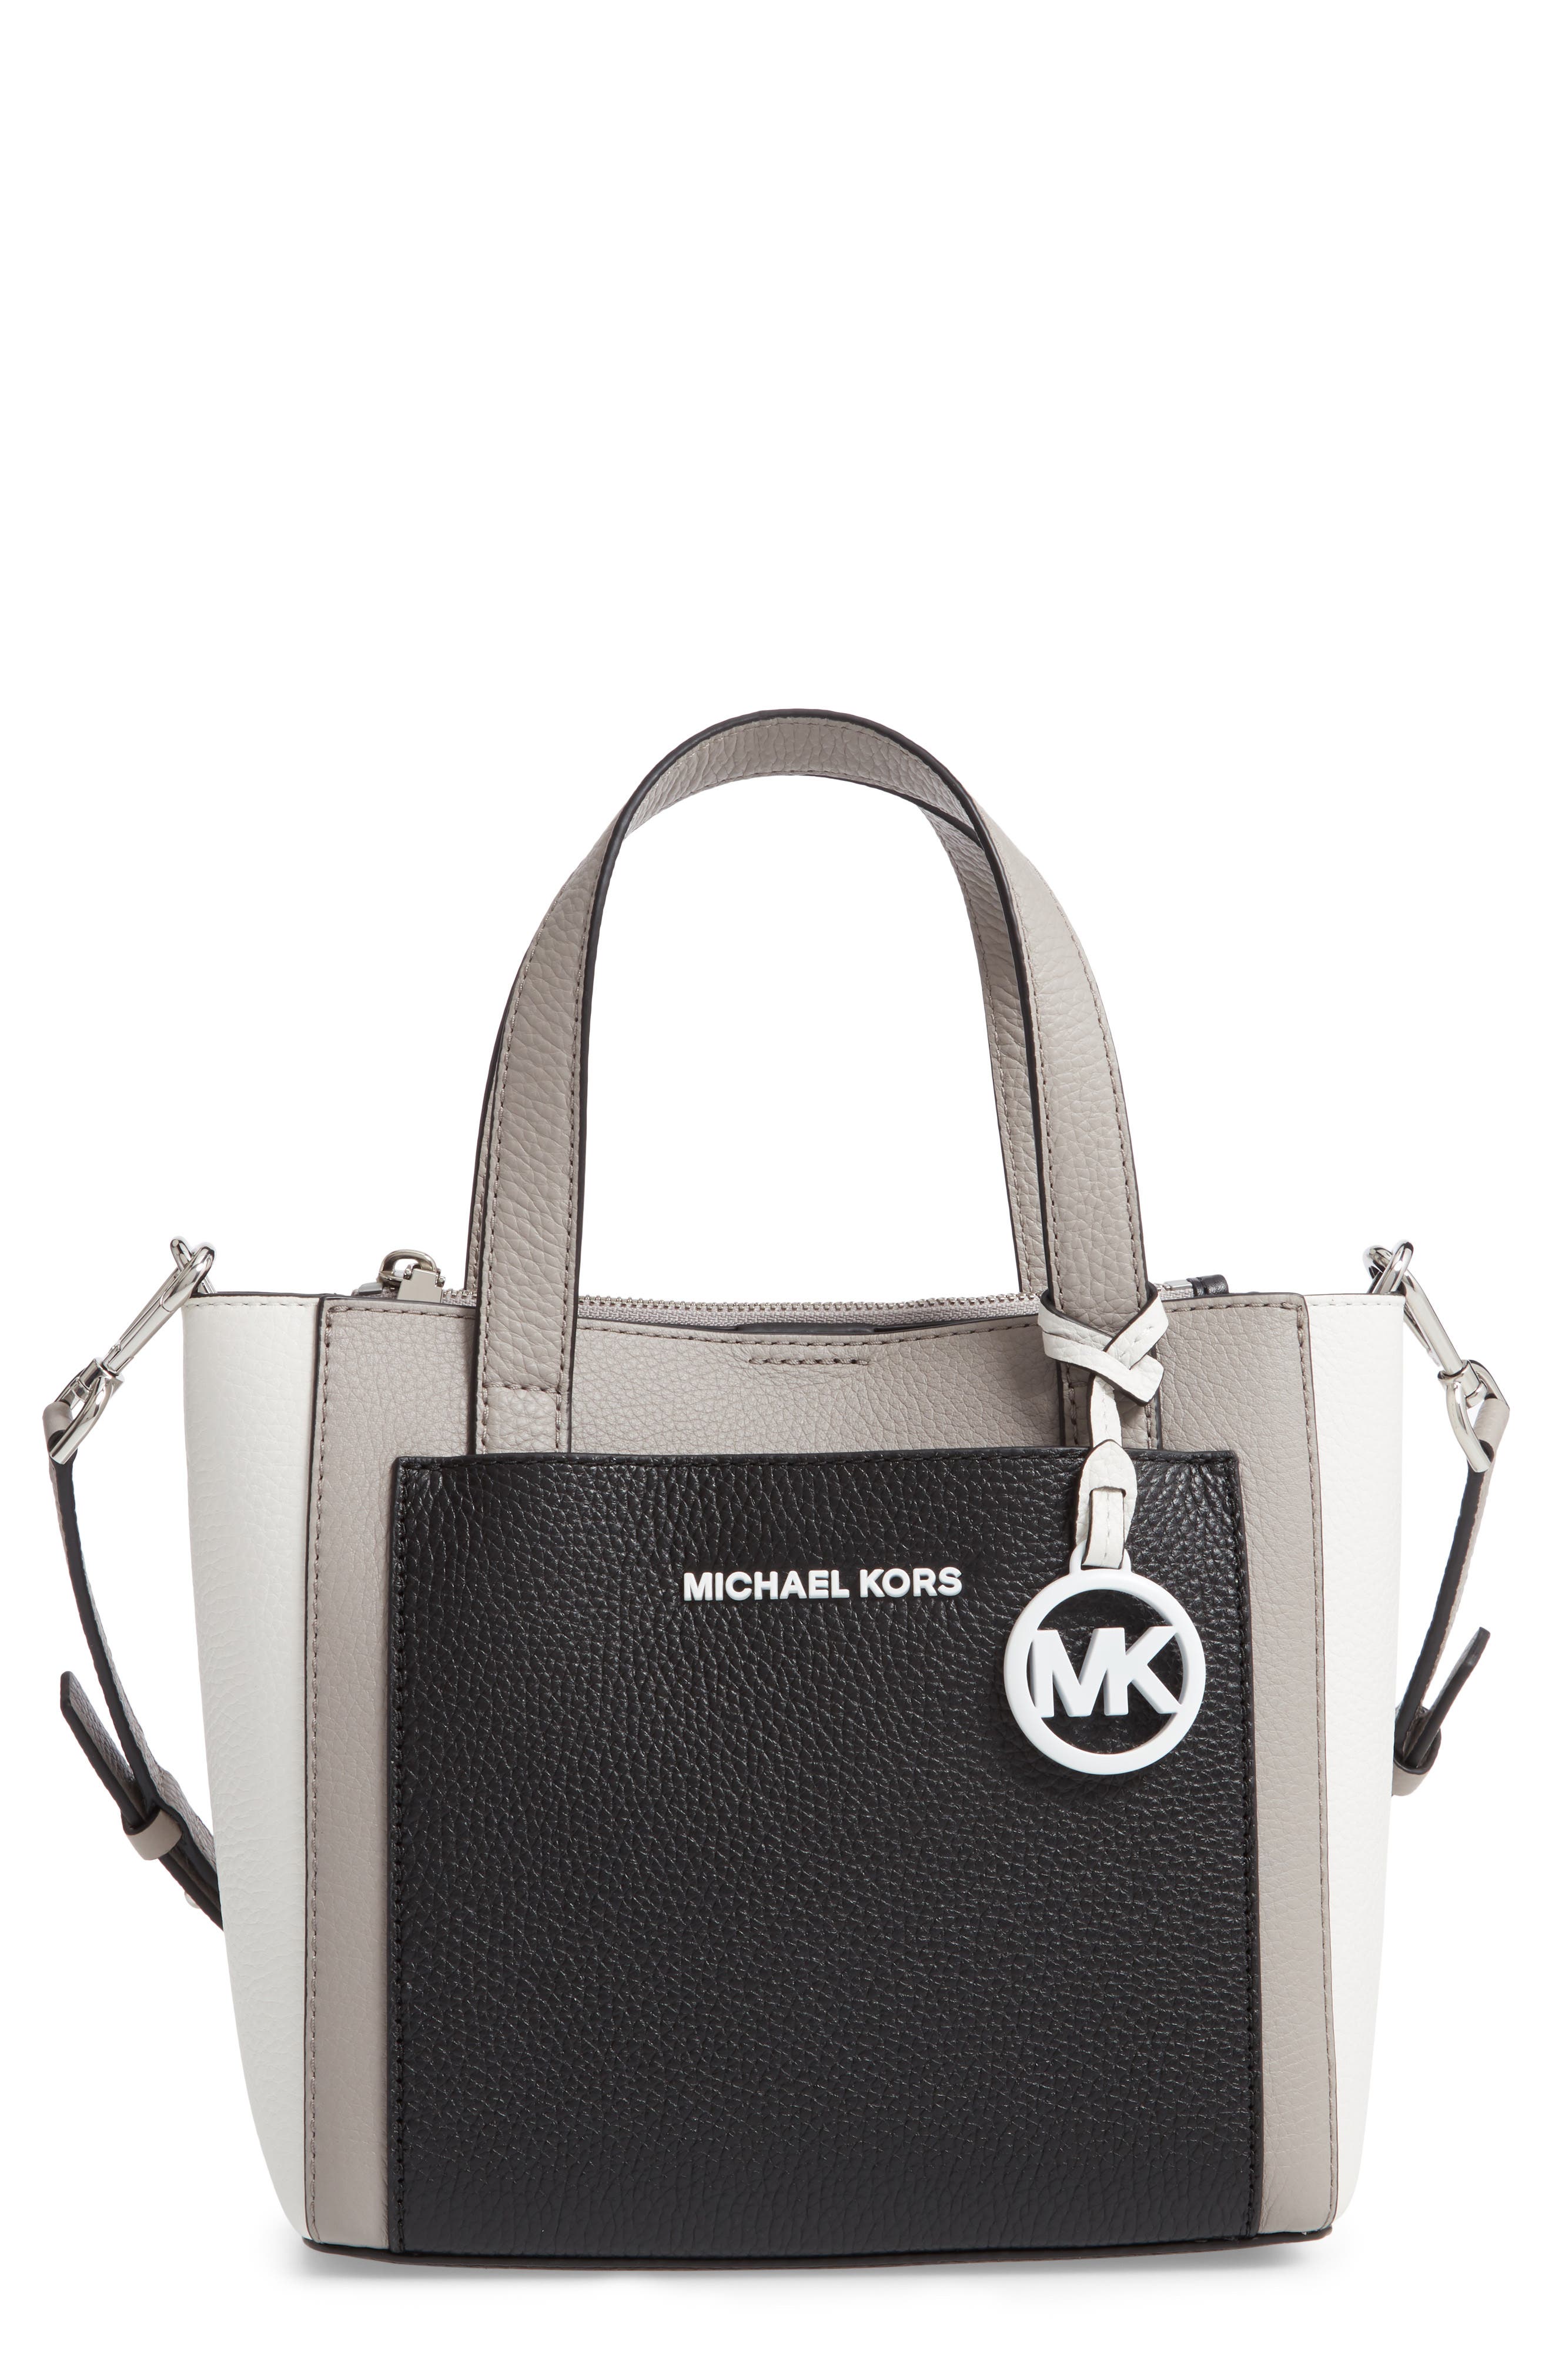 mk handbags sale nordstrom